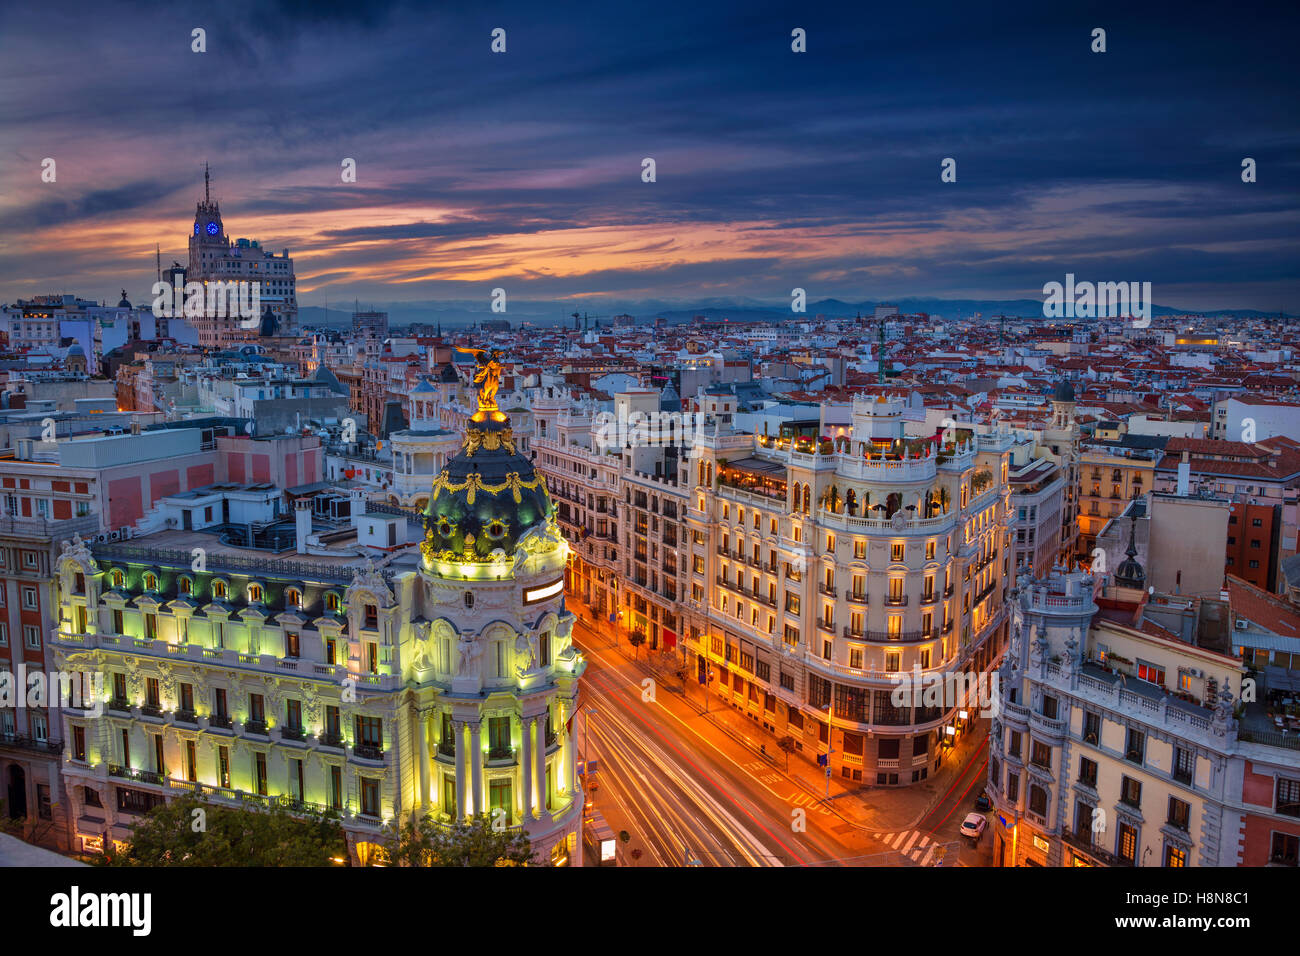 Madrid. Cityscape image of Madrid, Spain during sunset. Stock Photo